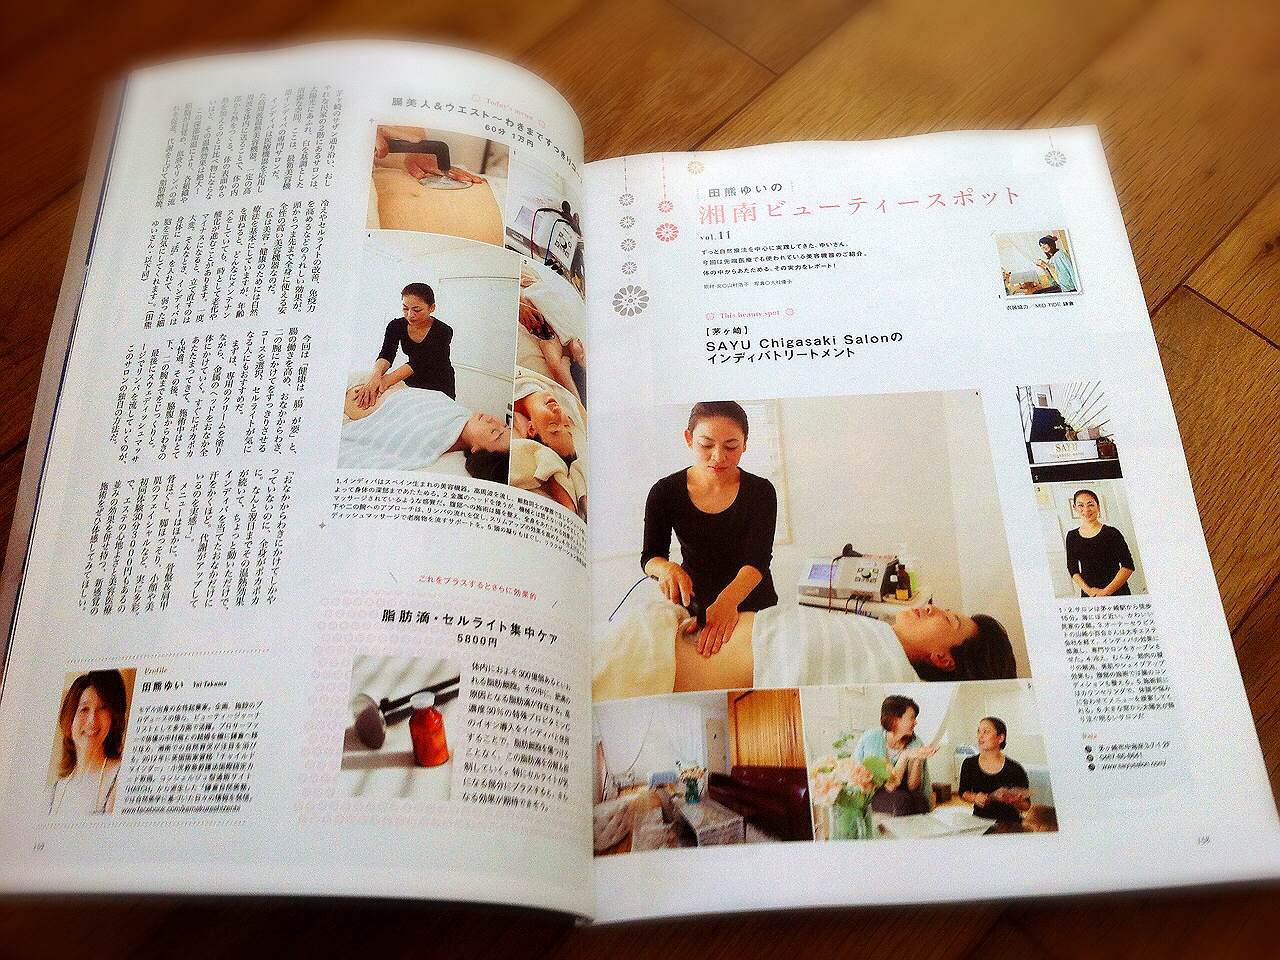 SAYU Chigasaki Salonが湘南スタイルに掲載されました